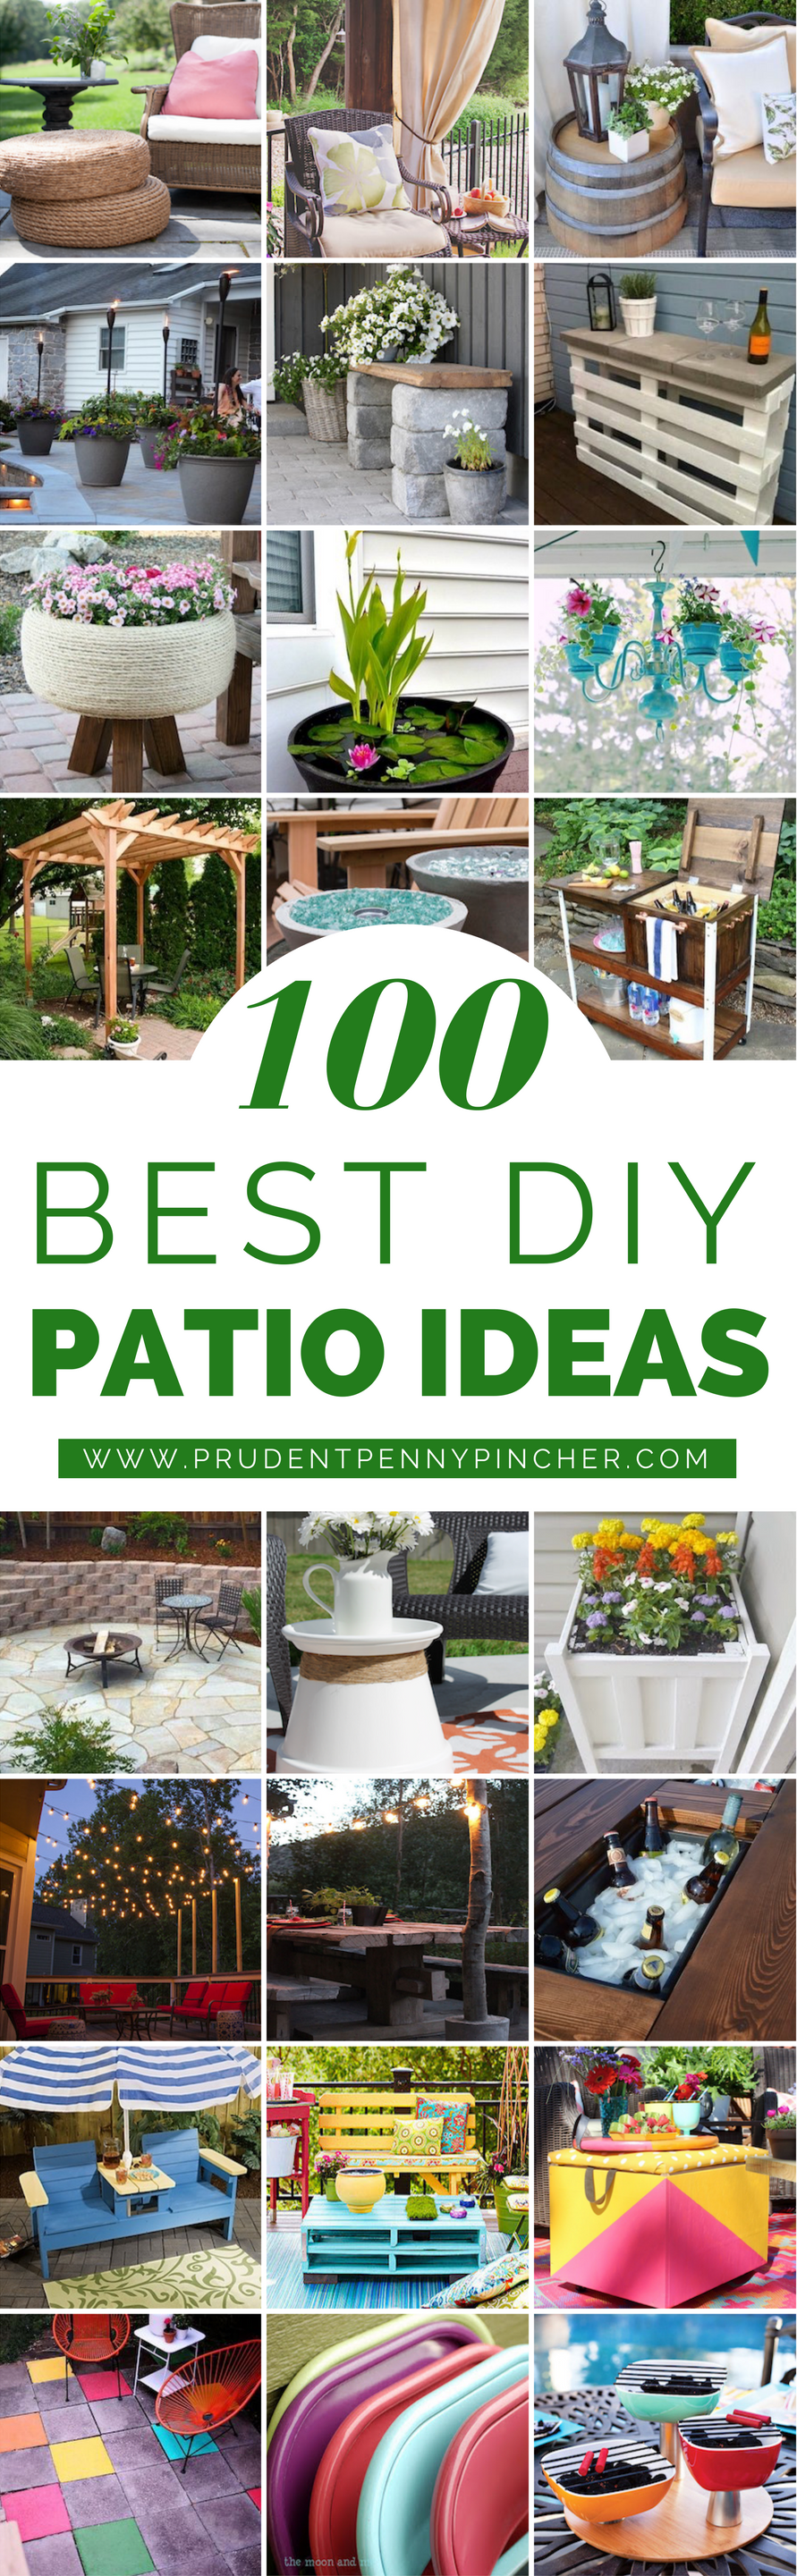 100 Best DIY Outdoor Patio Ideas Prudent Penny Pincher